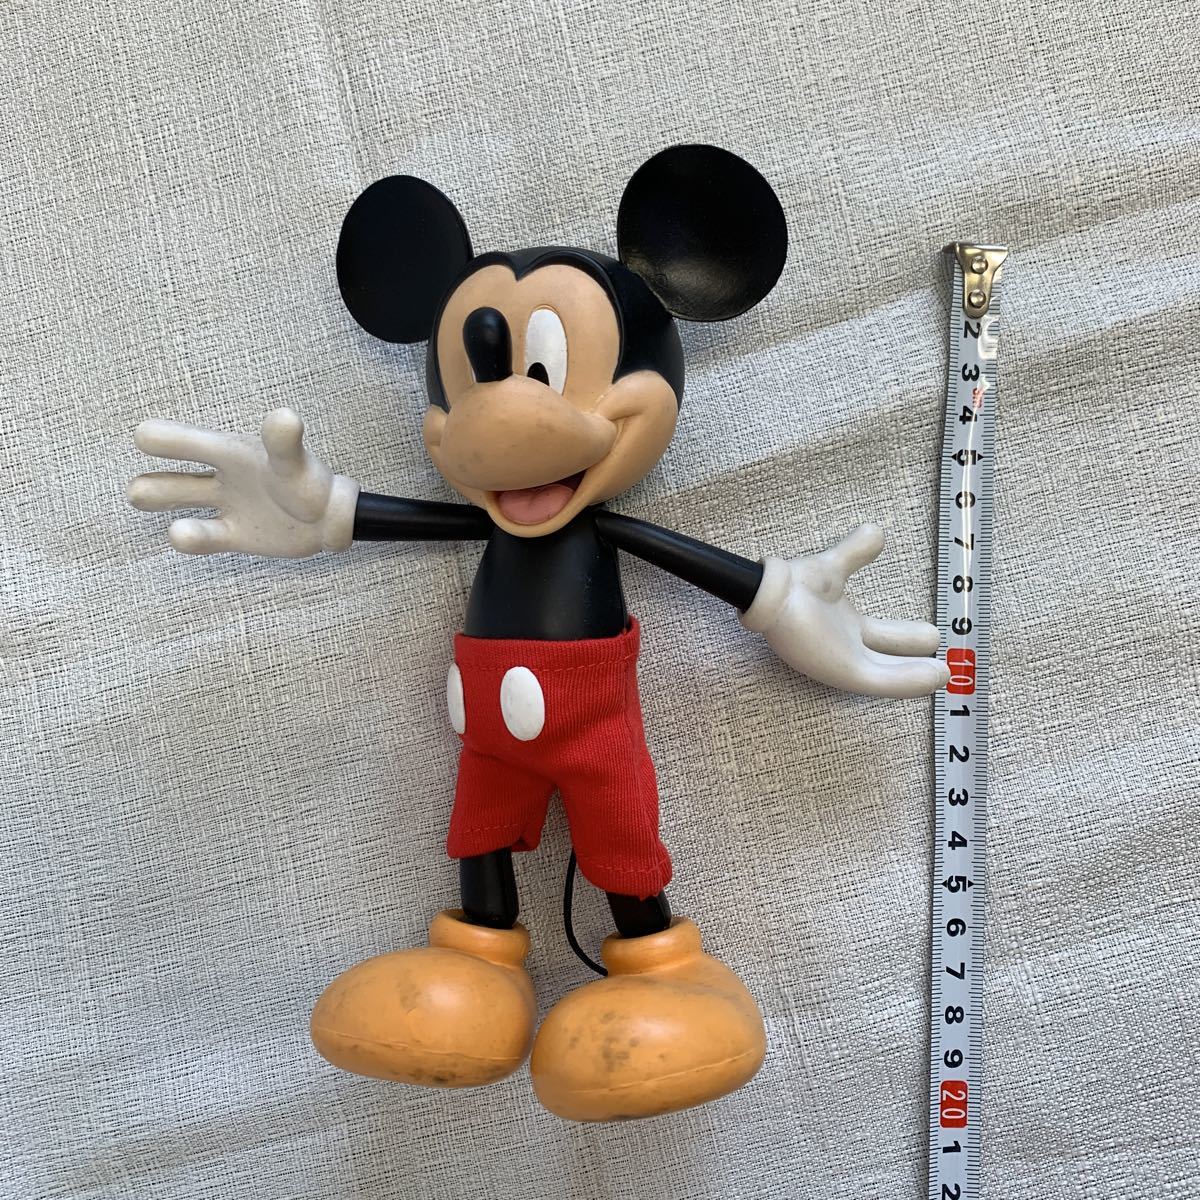  Mickey Mouse Disney 2001 год передвижной тип фигурка meti com игрушка 